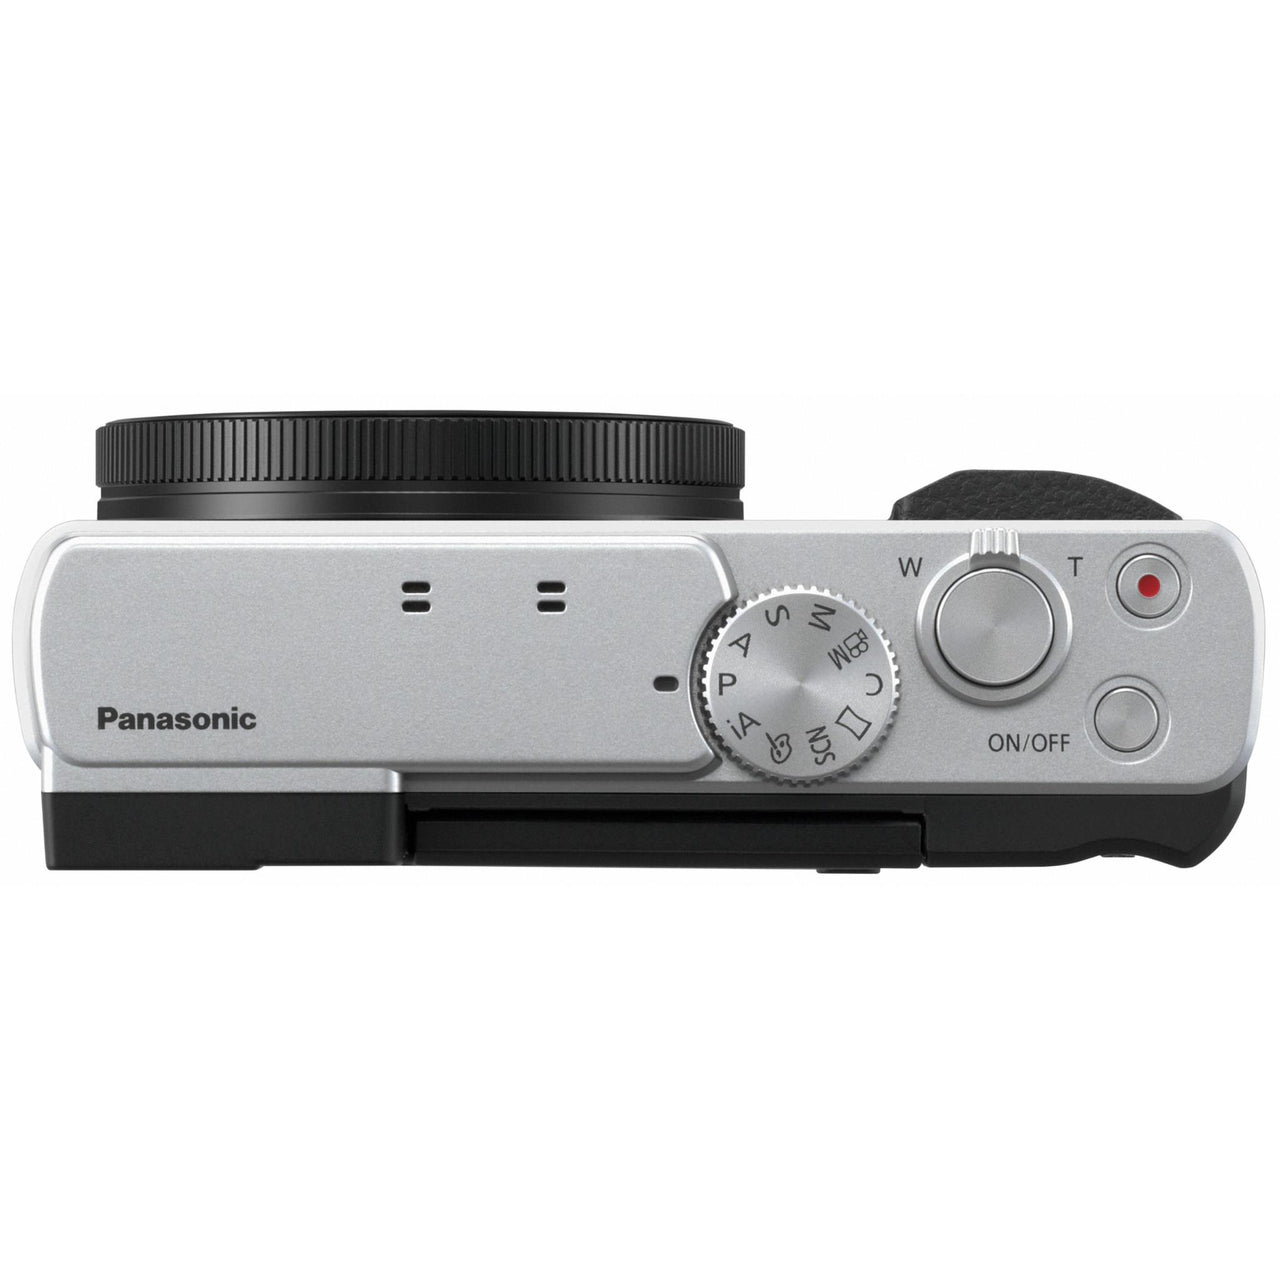 Panasonic Lumix DMC-TZ95D Compact Digital Camera - Silver Panasonic